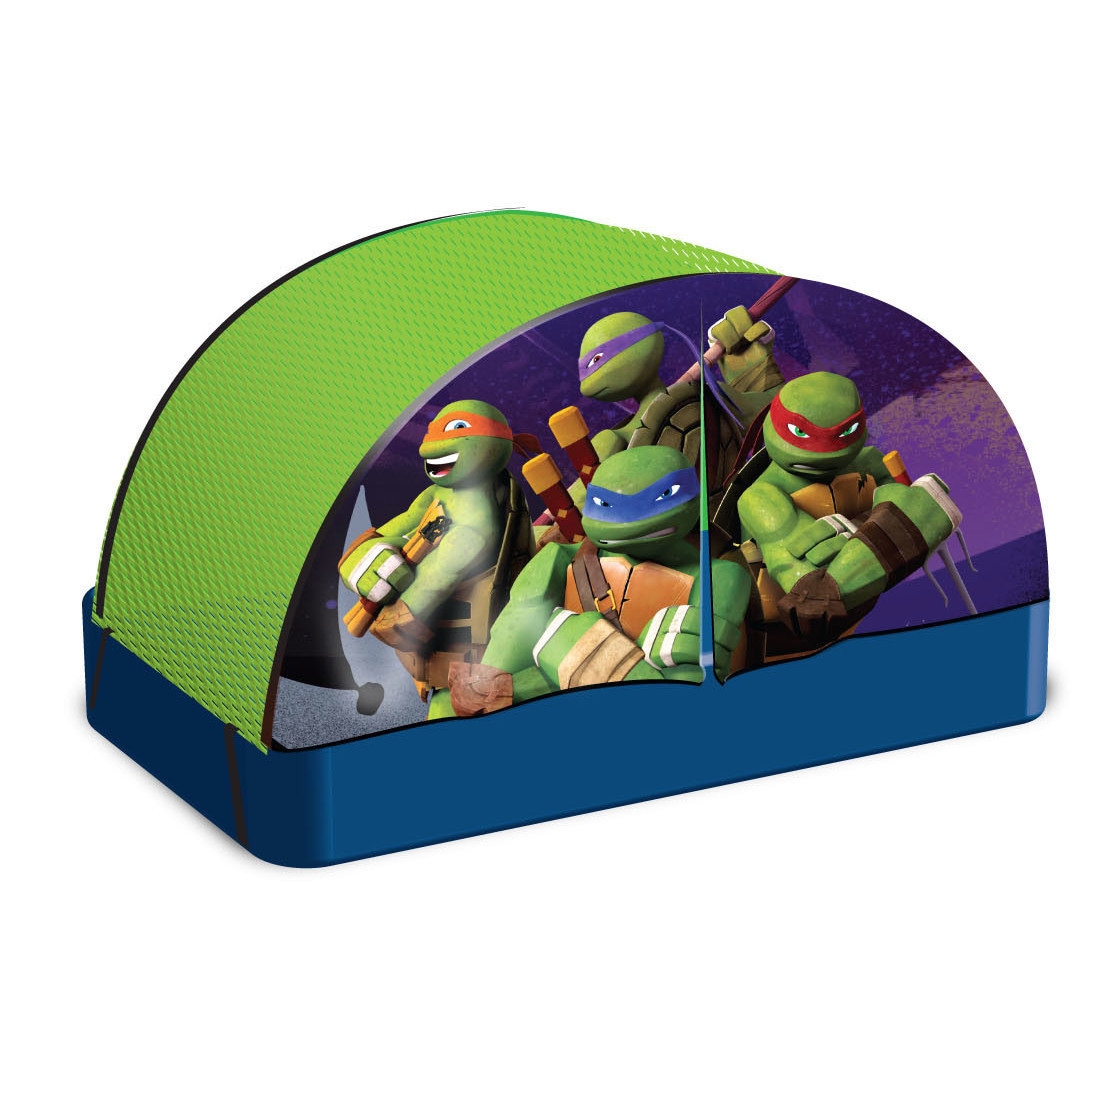 Teenage Mutant Ninja Turtle Sheel Razer Foldable Tent for Sale in